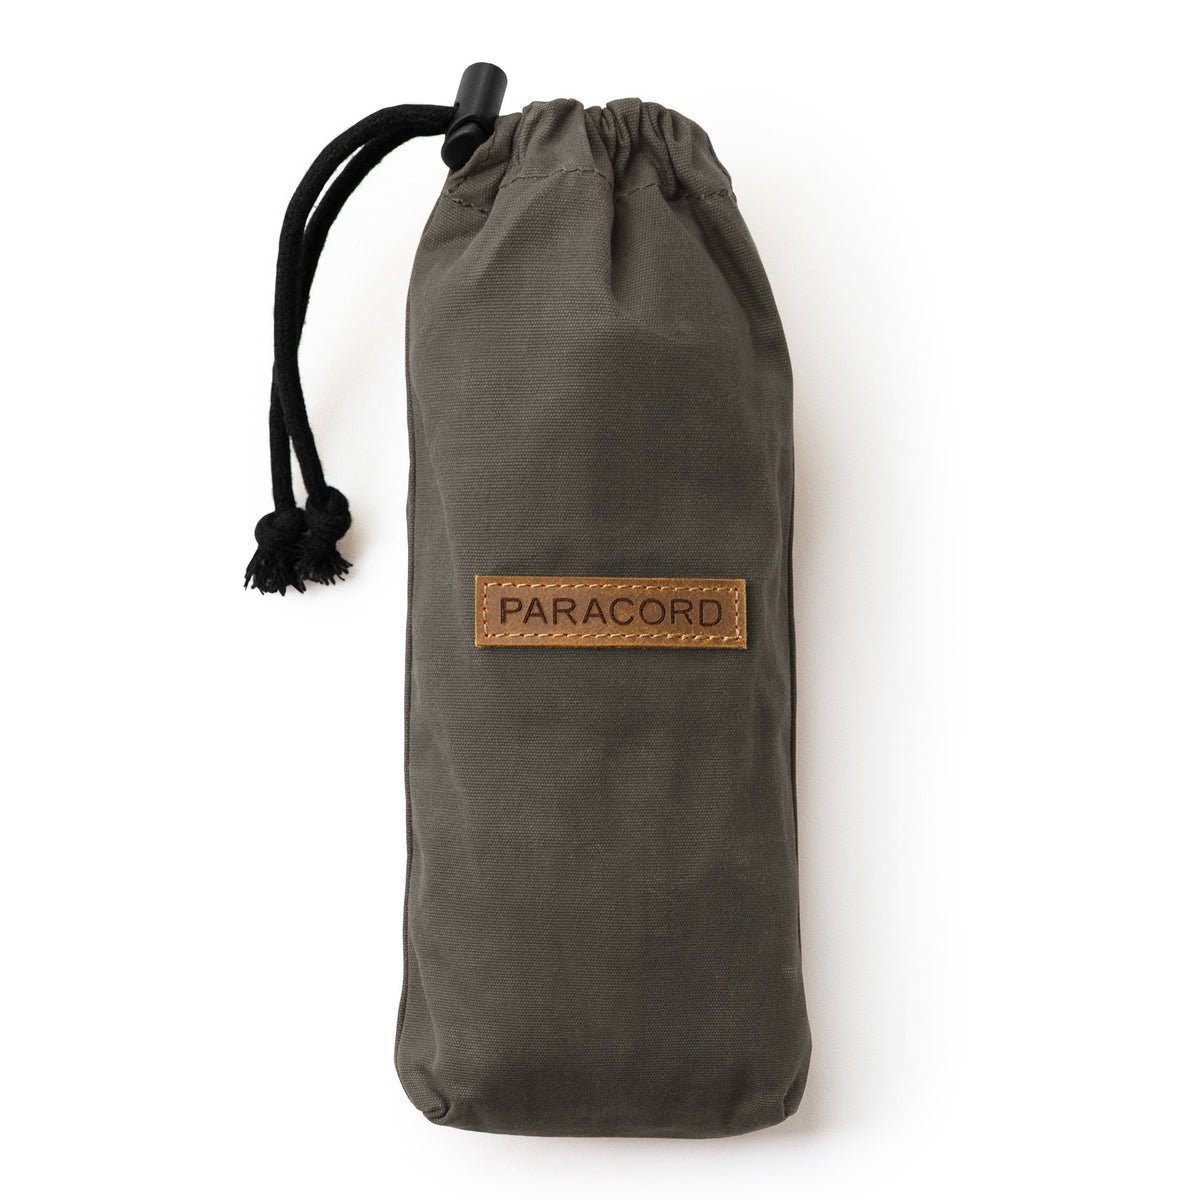 Canvas Bushcraft Bag for Paracord Container TACAMO Charcoal Gray 